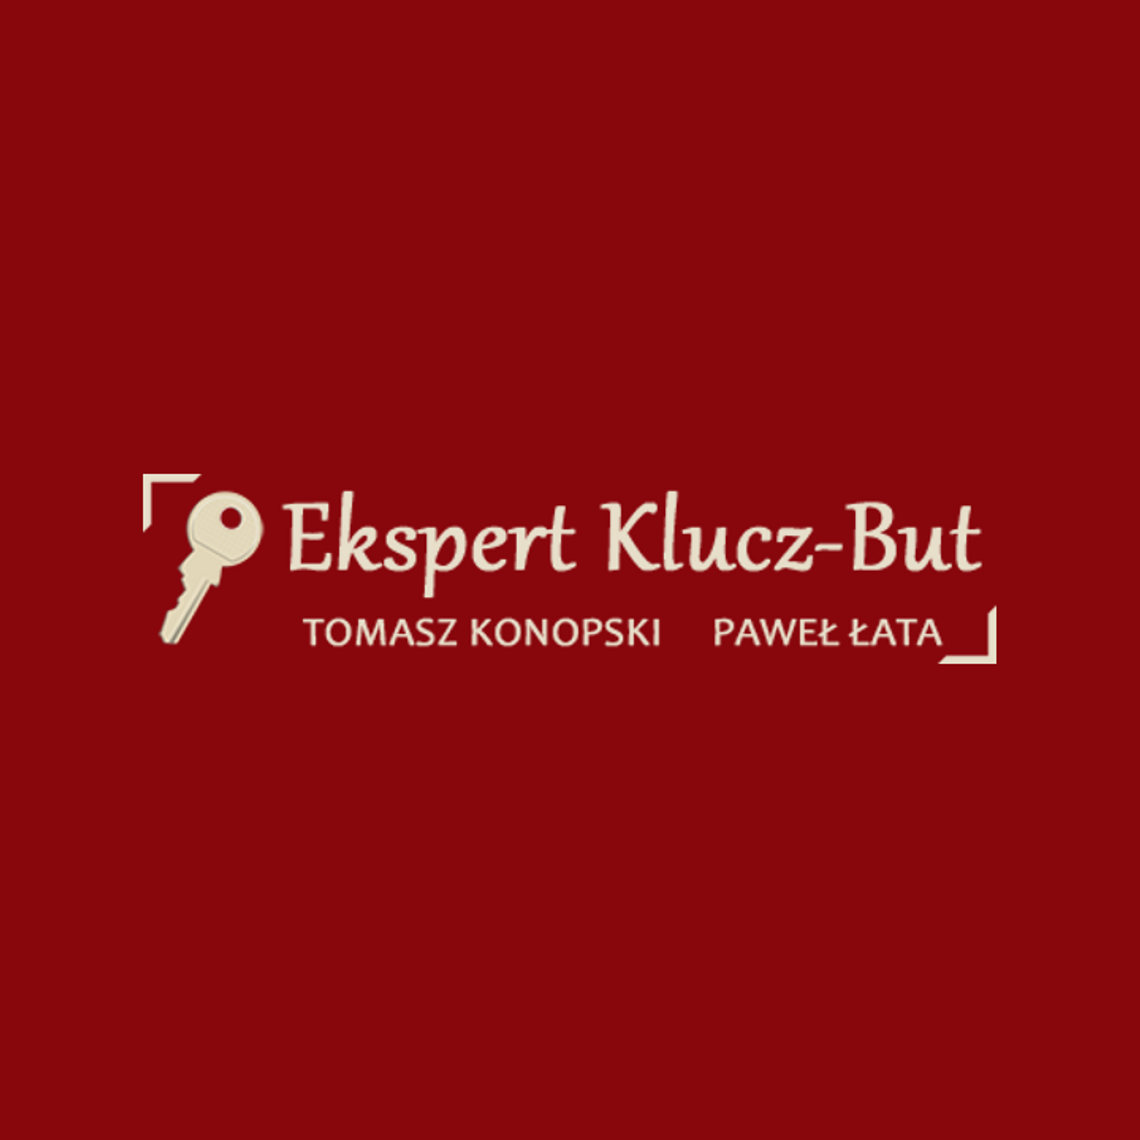 EKSPERT KLUCZ-BUT S.C.